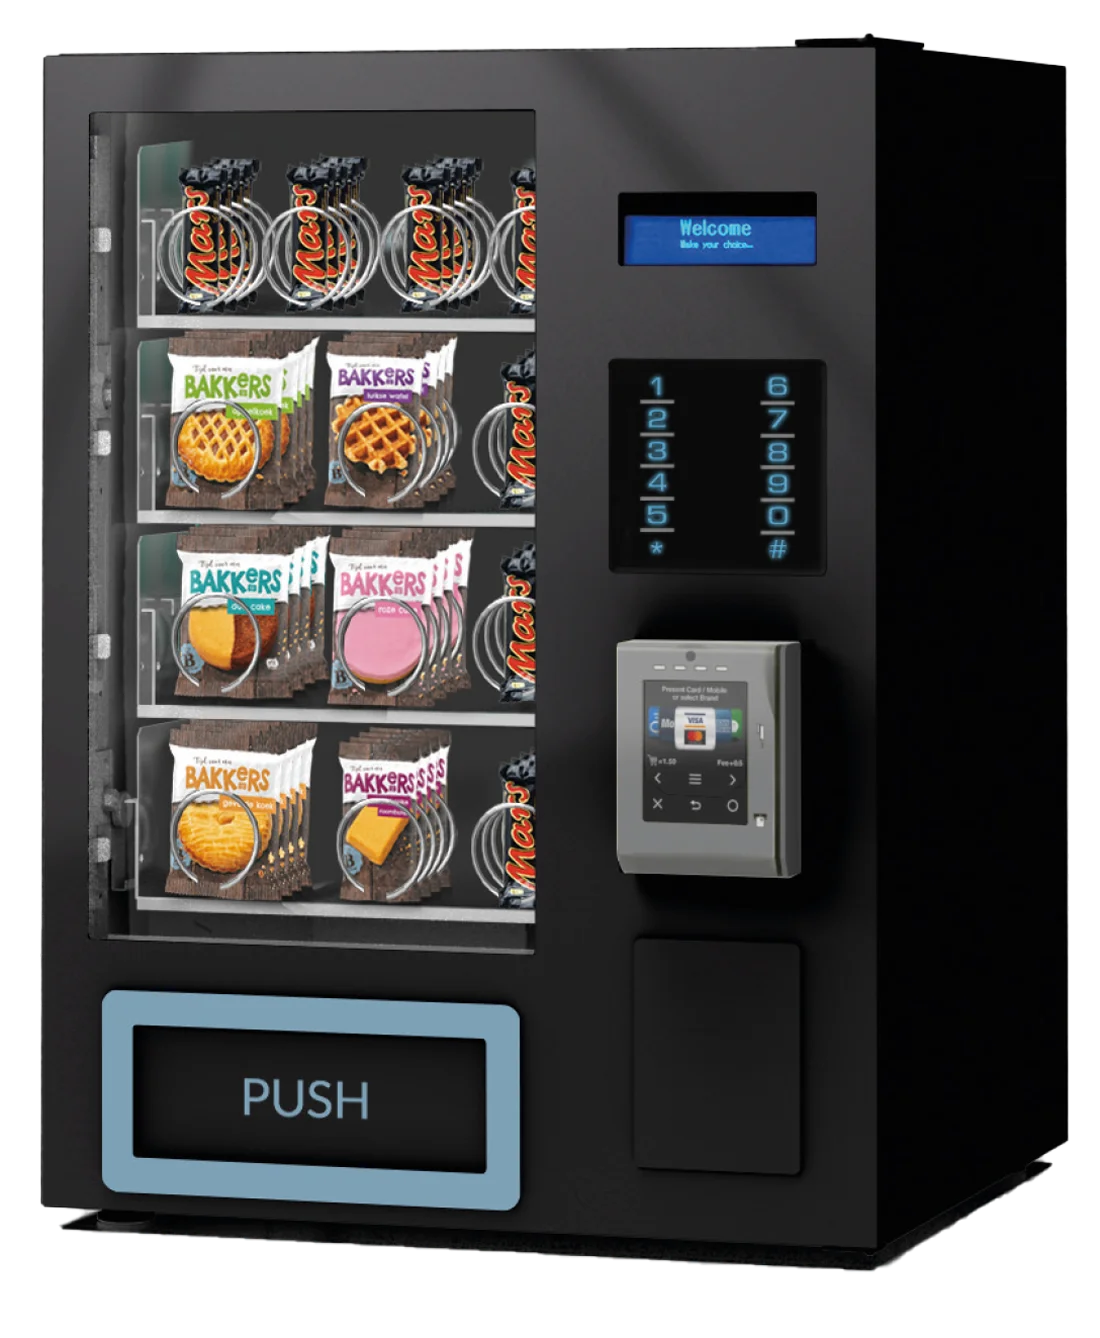 Automat Loketautomaten Automatiek - Hot food vending